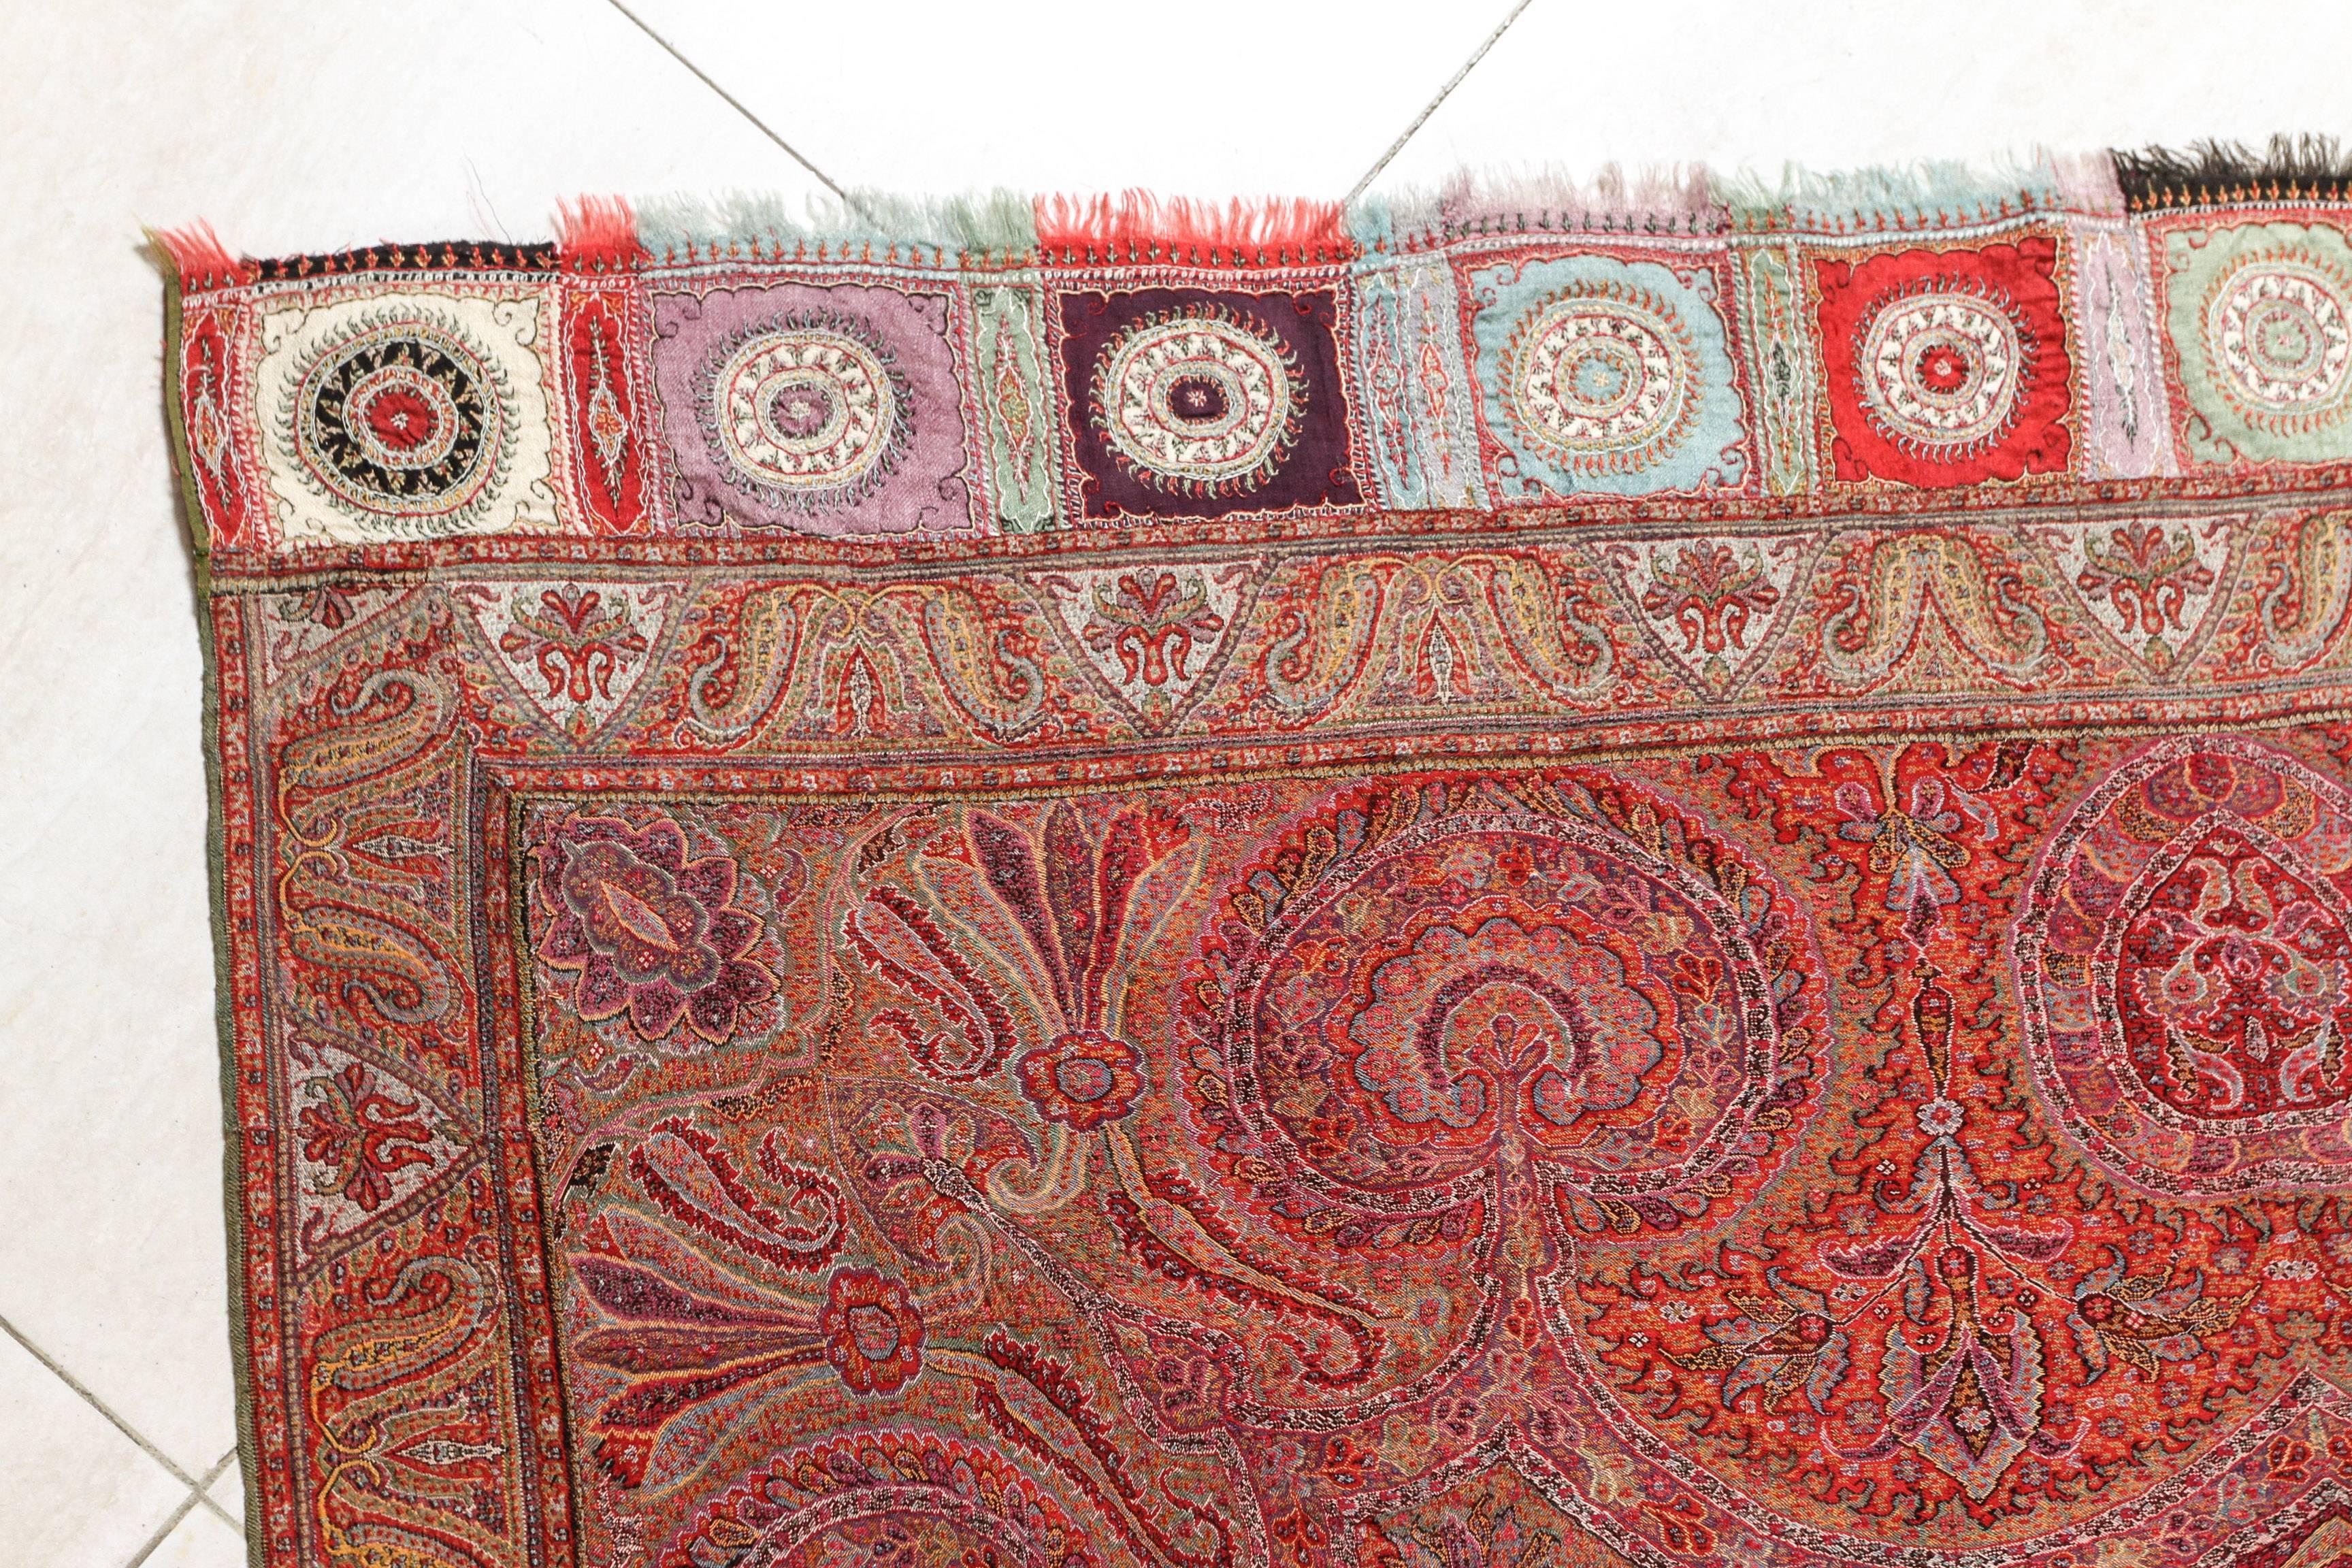 Antique Cashmere Paisley Throw Textile Shawl, 1850-1890 For Sale 2